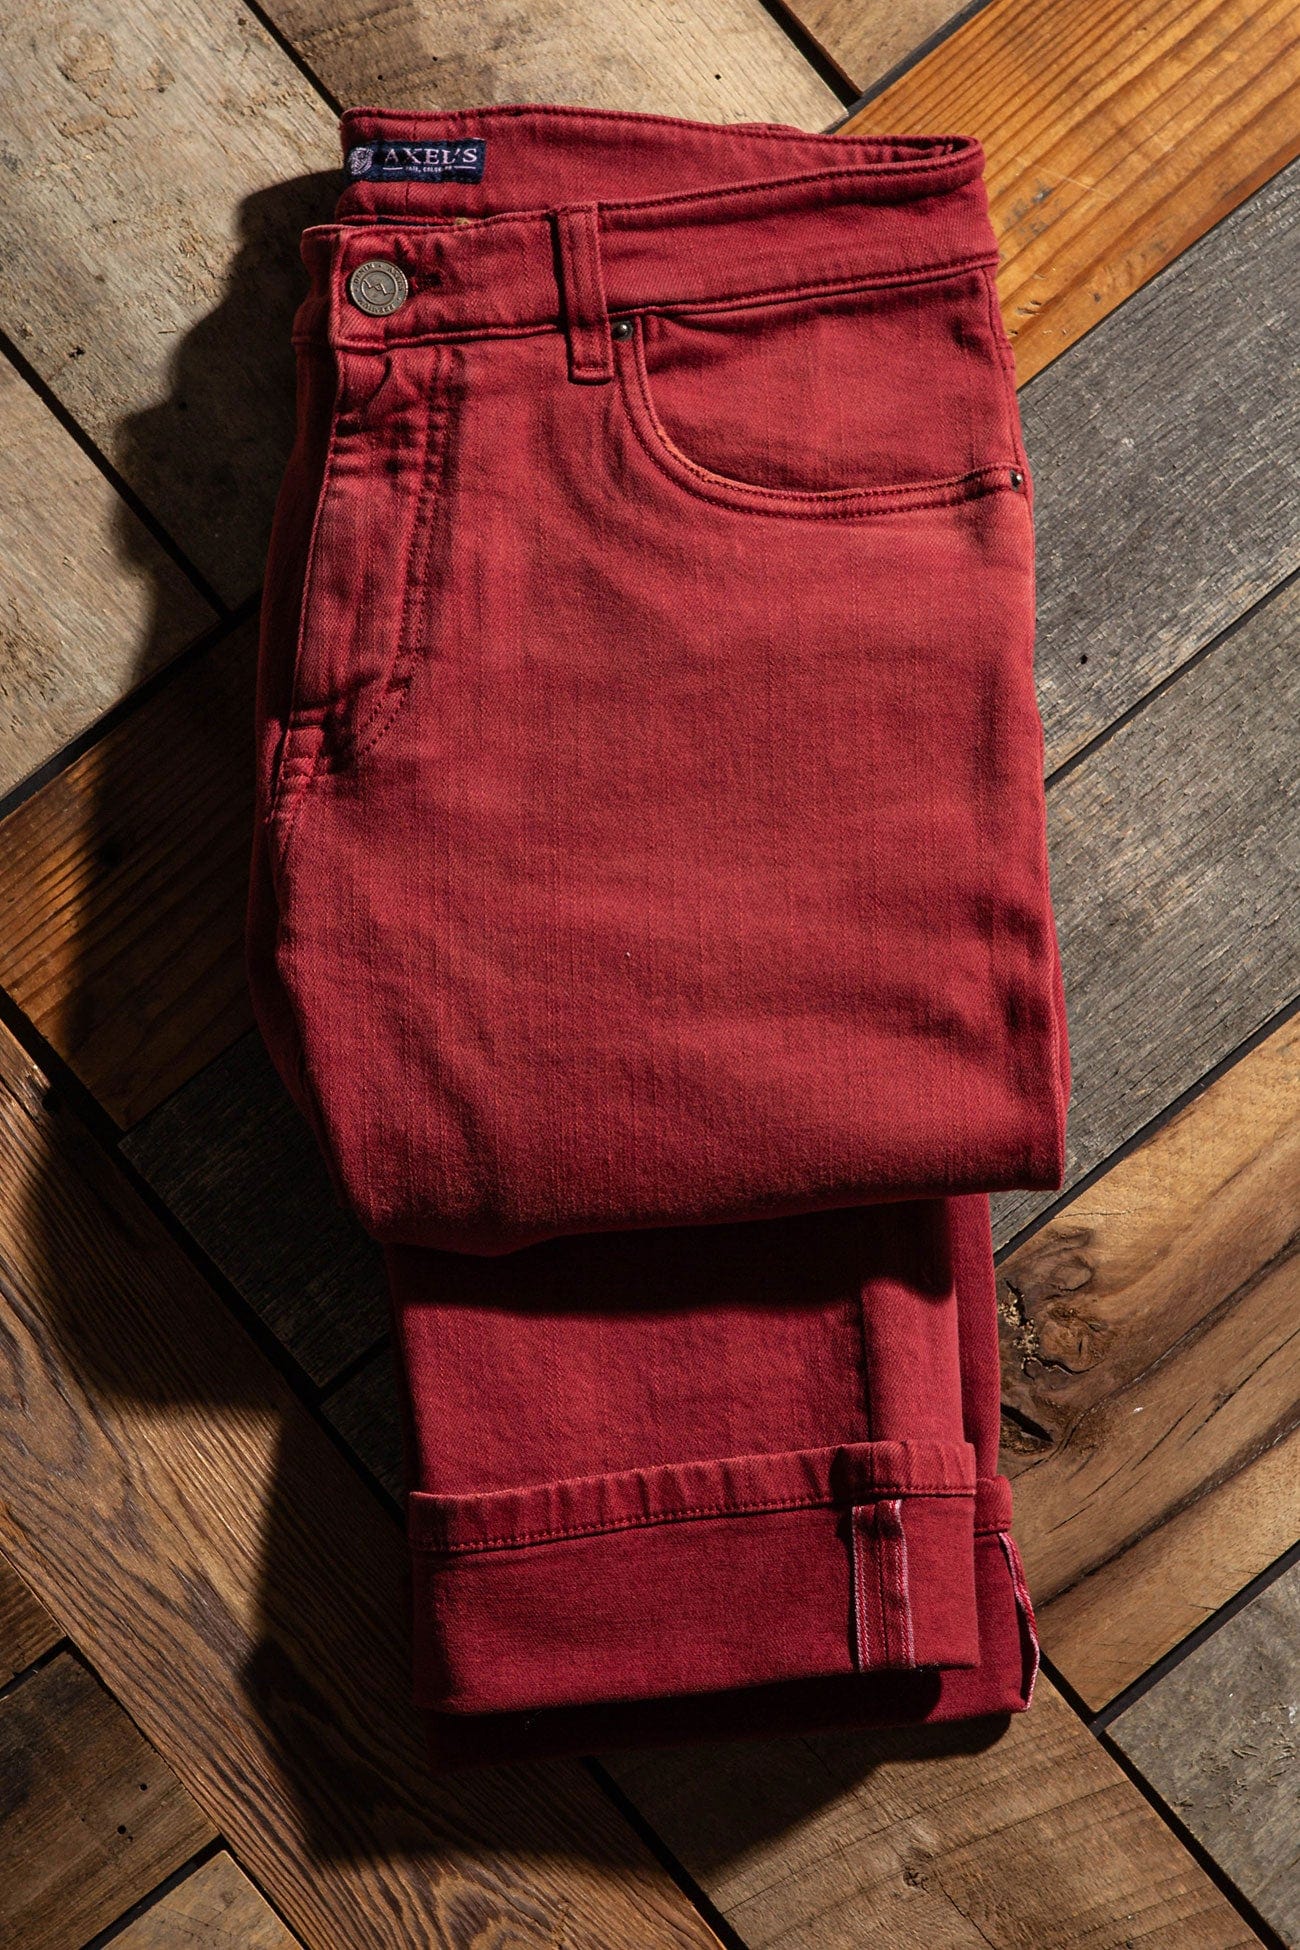 Axels Premium Denim Tucson Selvedge Denim In Cherry Mens - Pants - 5 Pocket